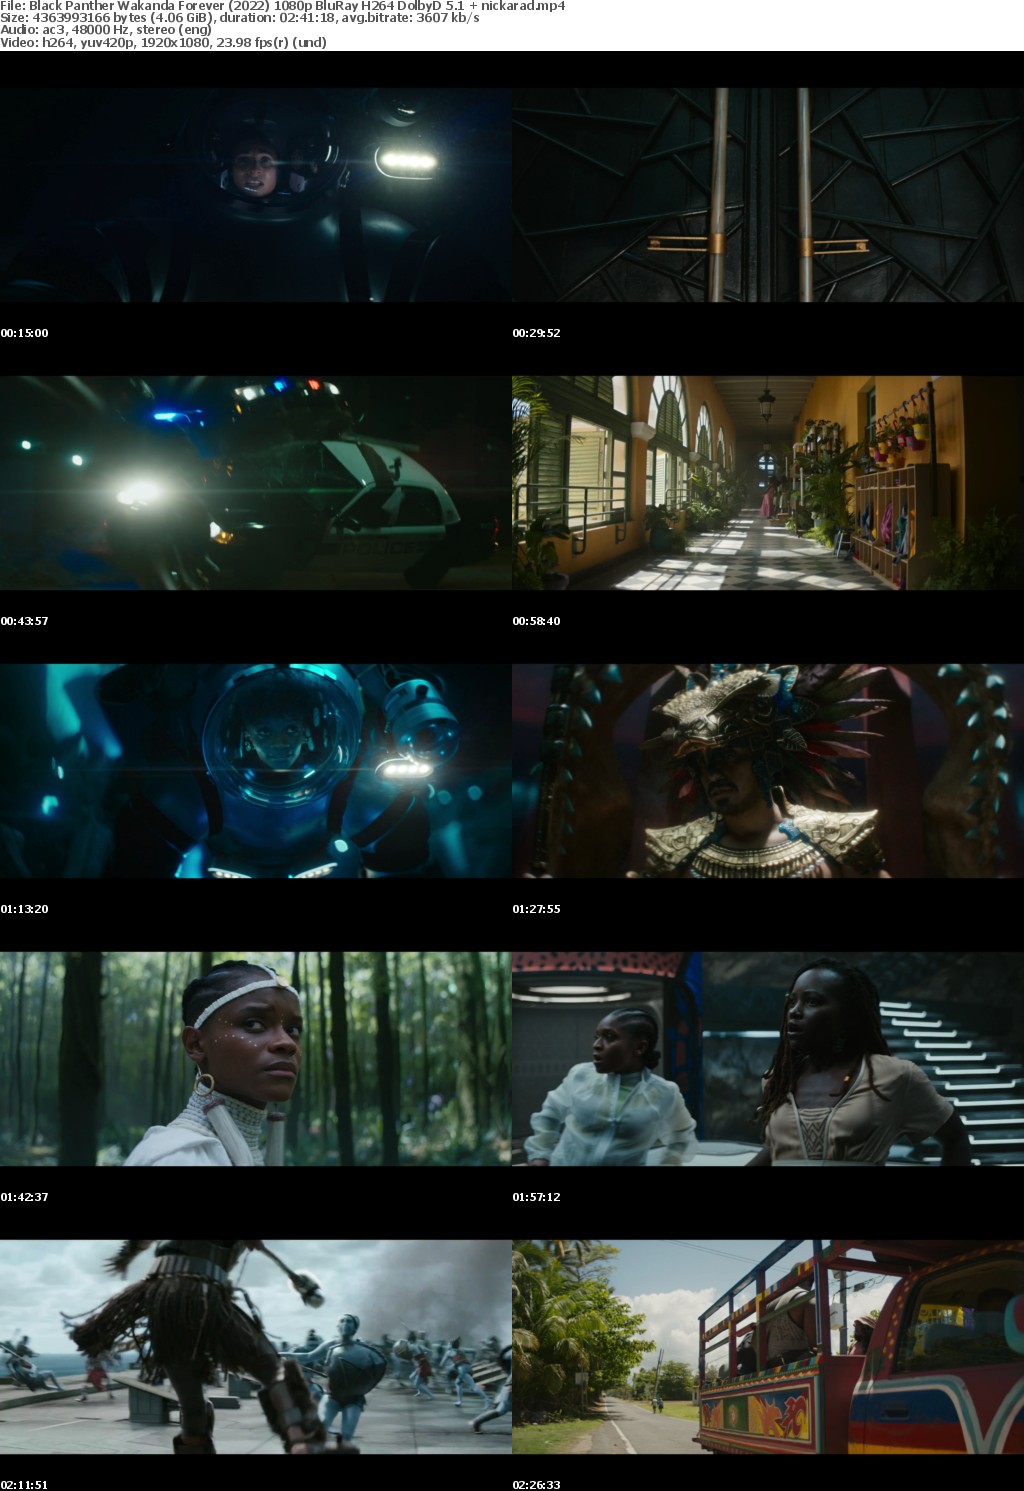 Black Panther Wakanda Forever (2022) 1080p BluRay H264 DolbyD 5 1 nickarad